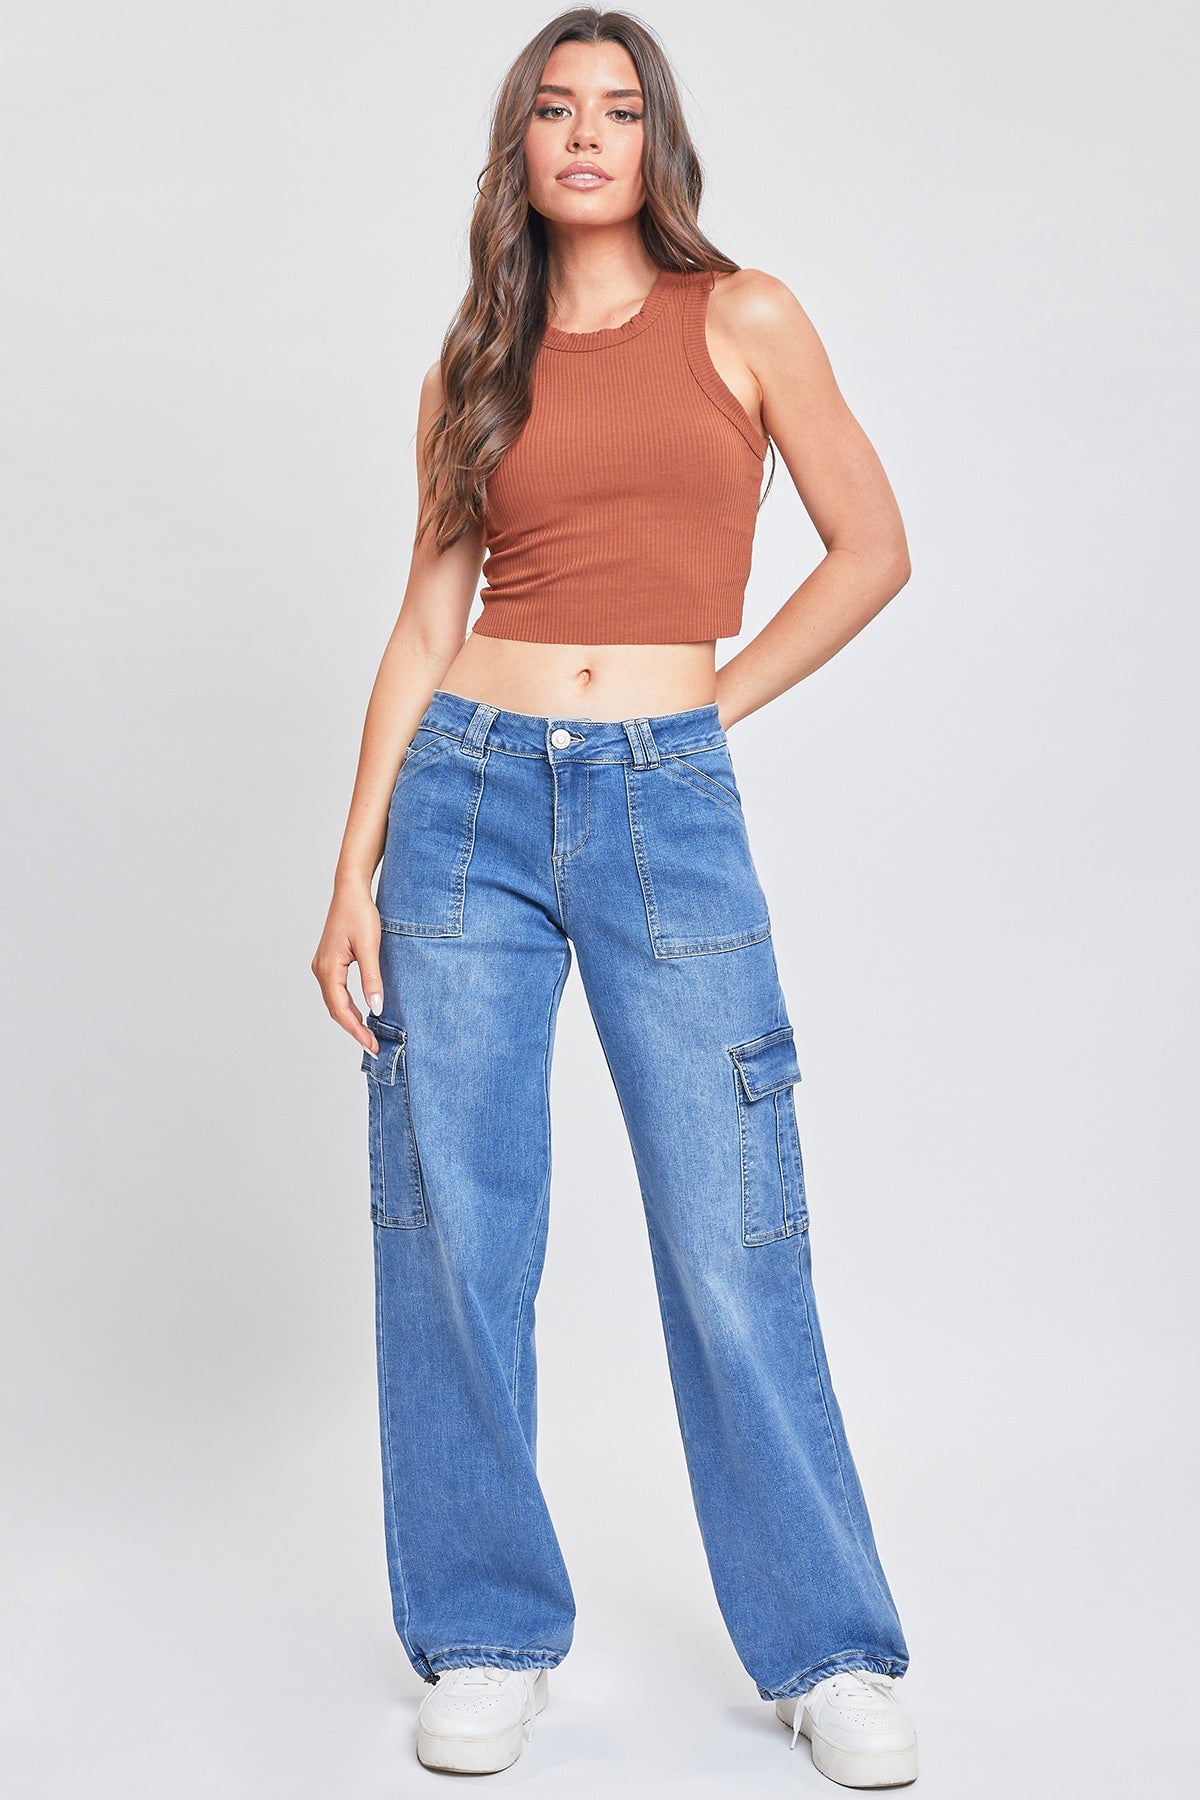 YMI Jeans Women's Low Rise Cargo Jeans with Bungee Hem - Walmart.com